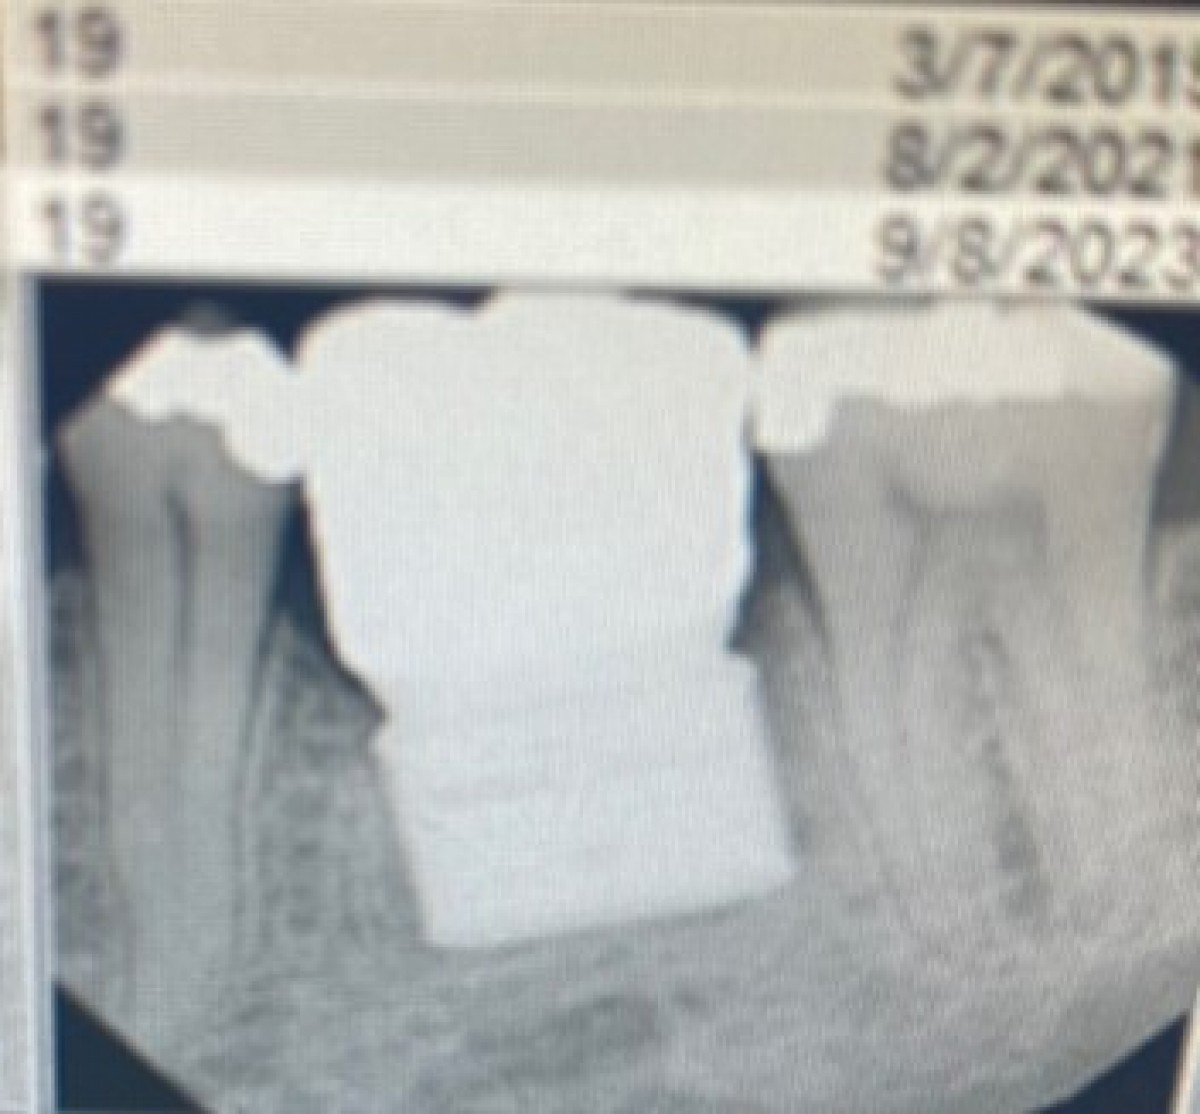 The Proximerge 2 dental implant. Photos: Dr. James Grant 